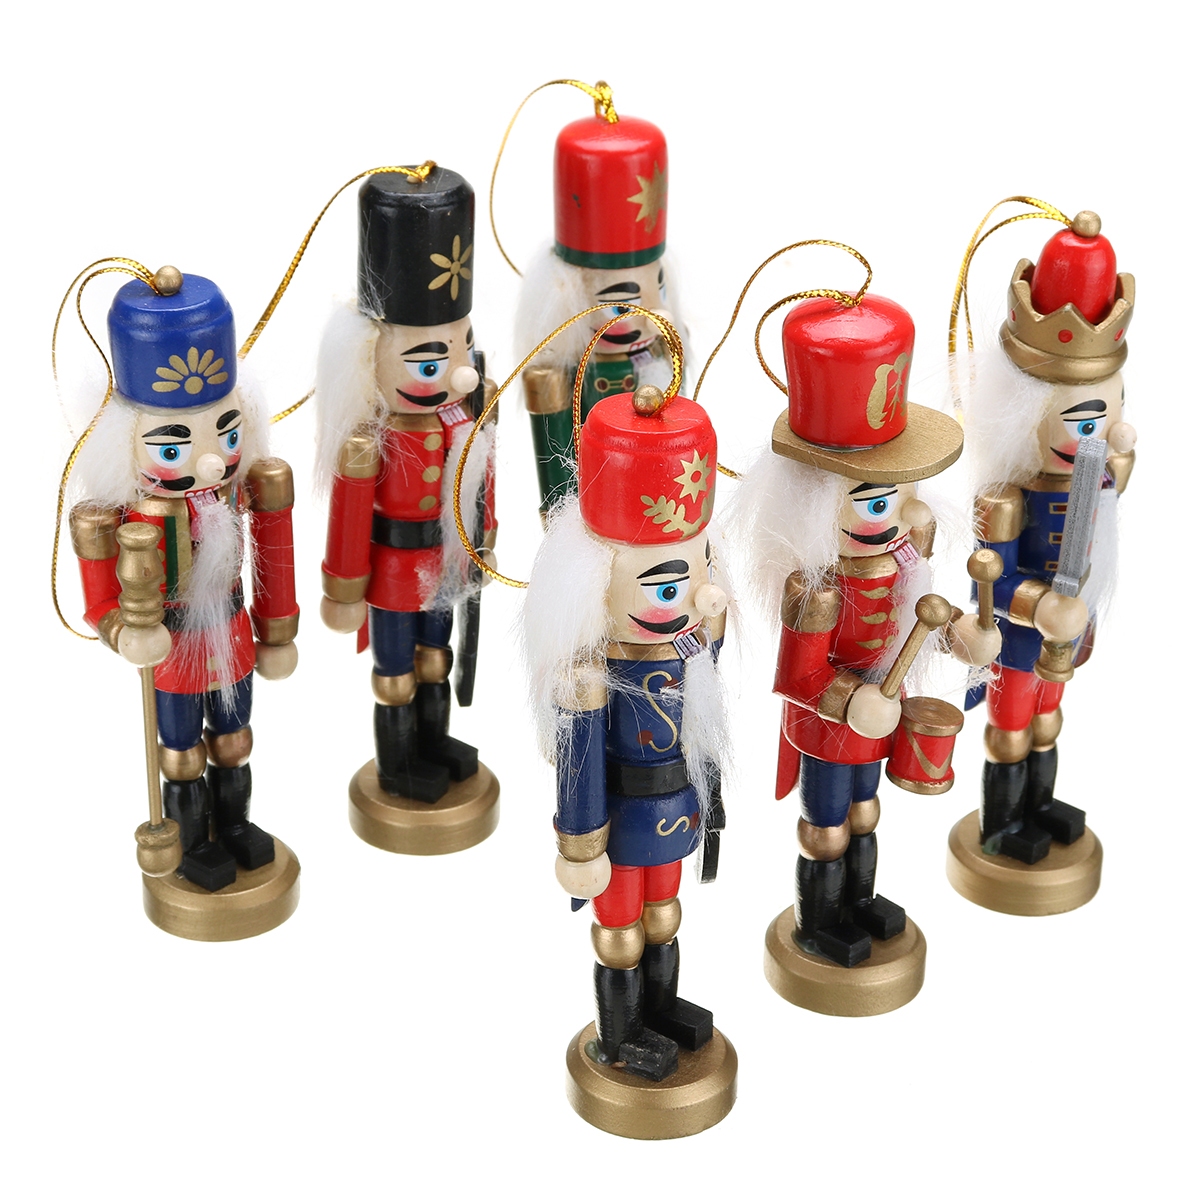 Wooden-Nutcracker-Doll-Soldier-Vintage-Handcraft-Decoration-Christmas-Gifts-1787904-7